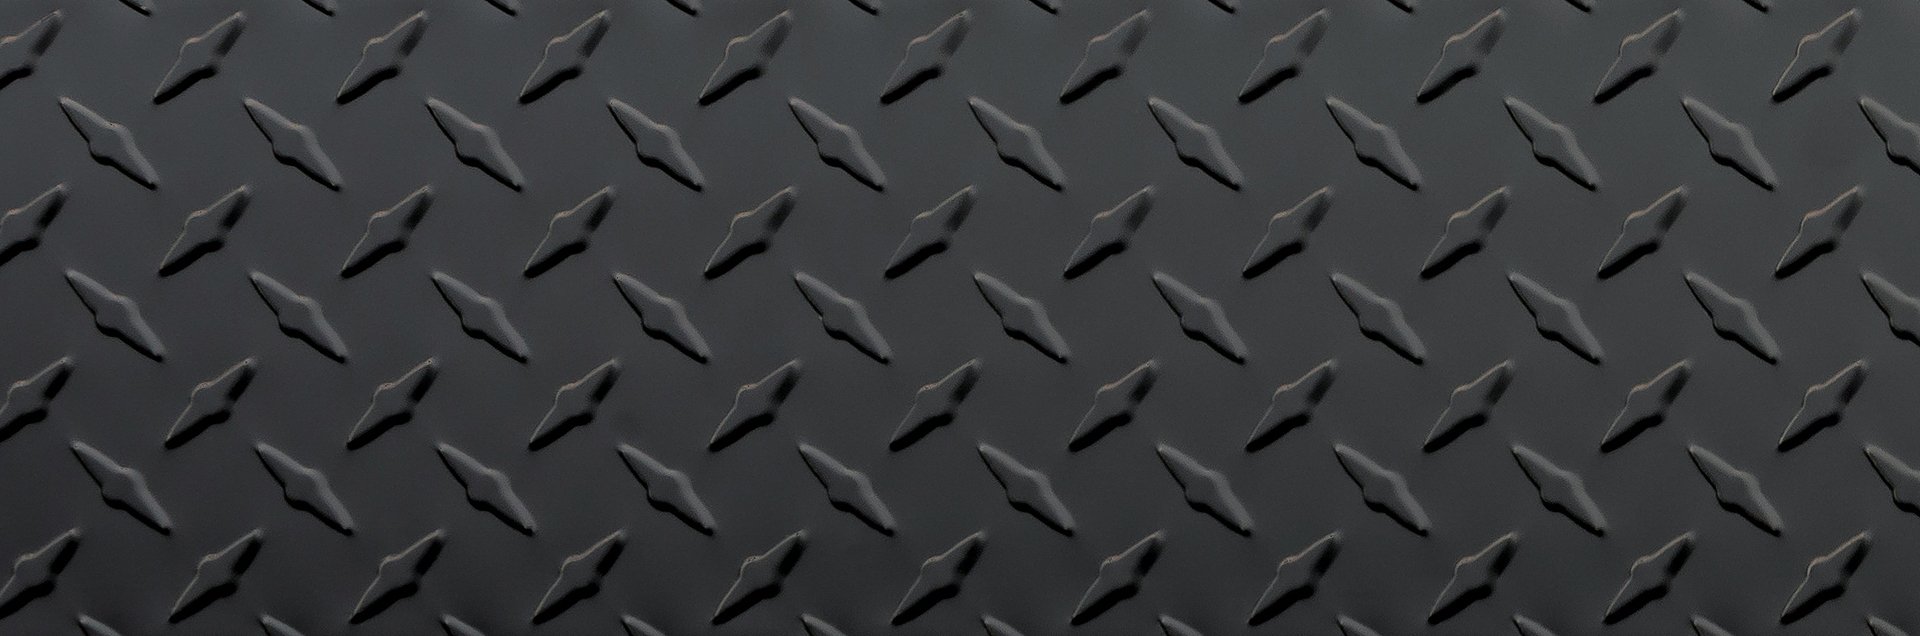 Garage-x noir black carbone.jpg